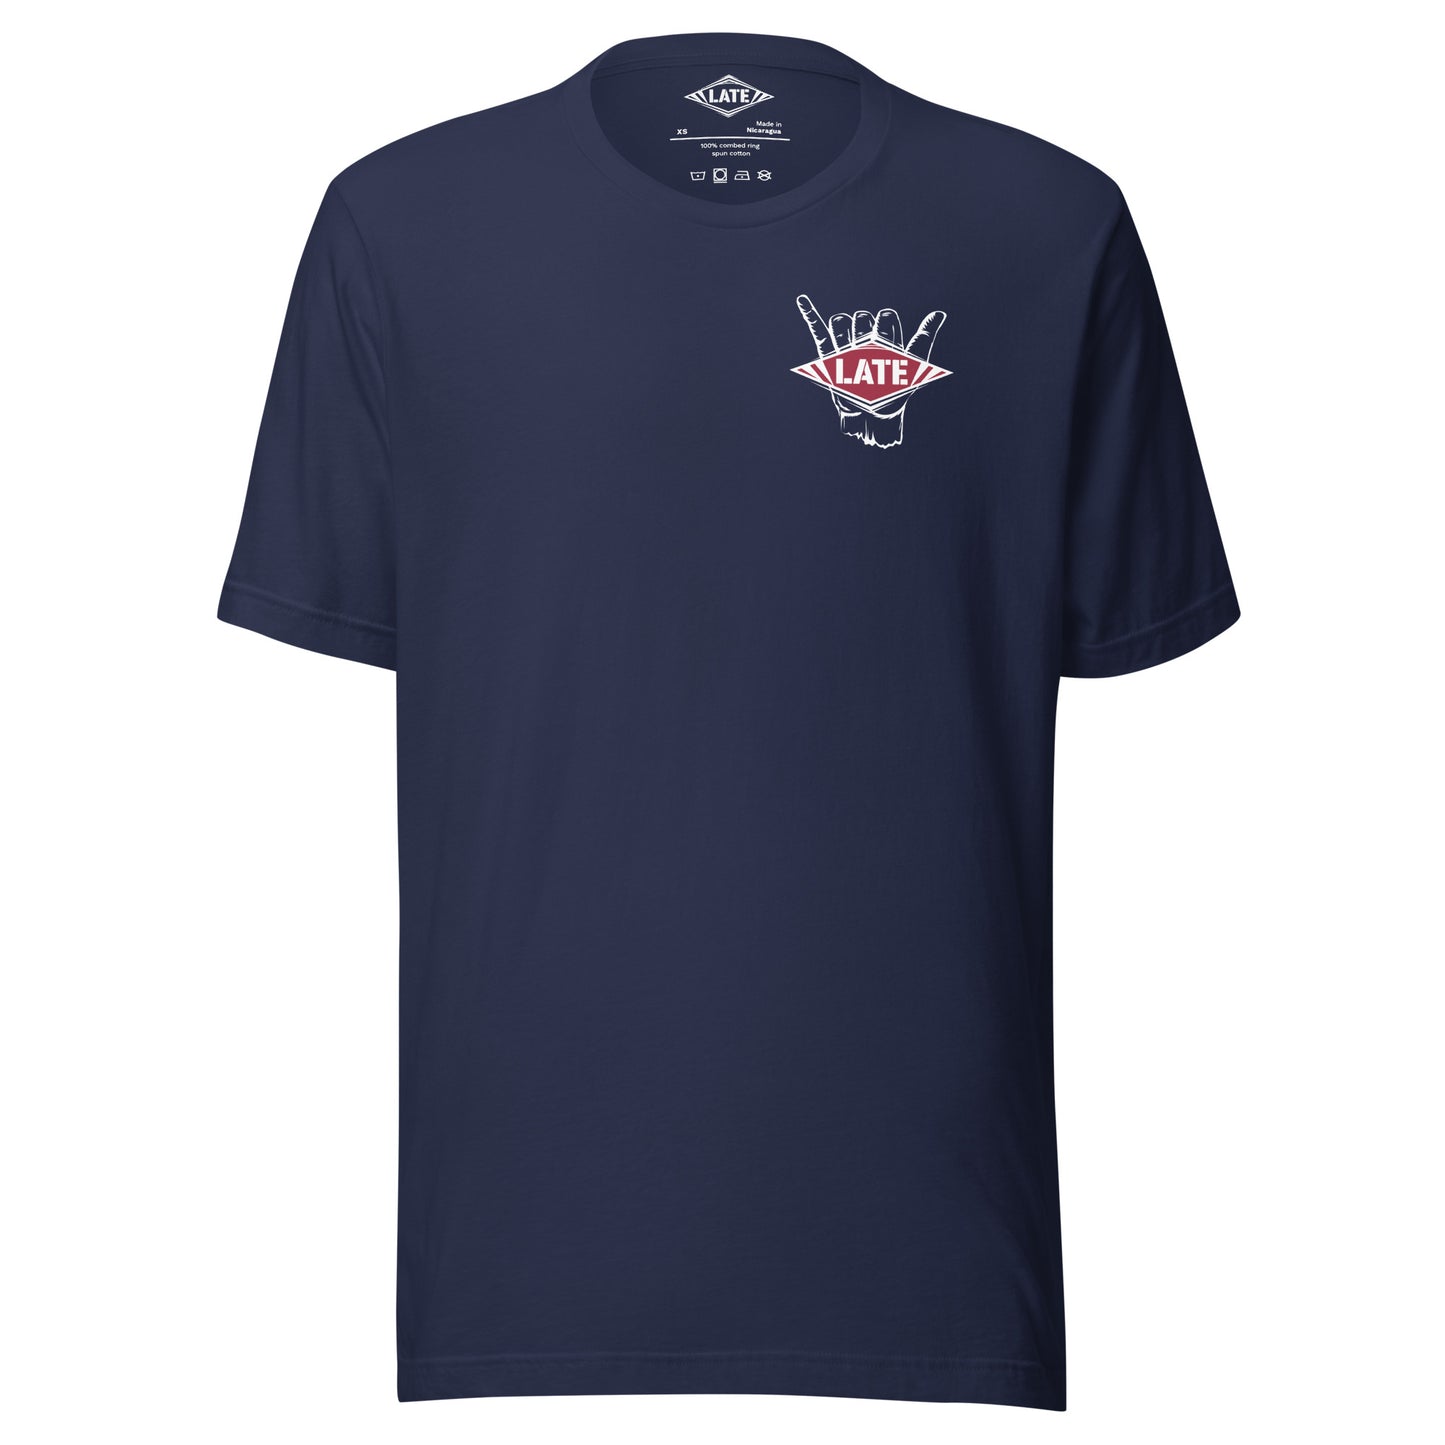 T-Shirt surfing main shaka avec le logo Late face avant t-shirt unisex couleur navy